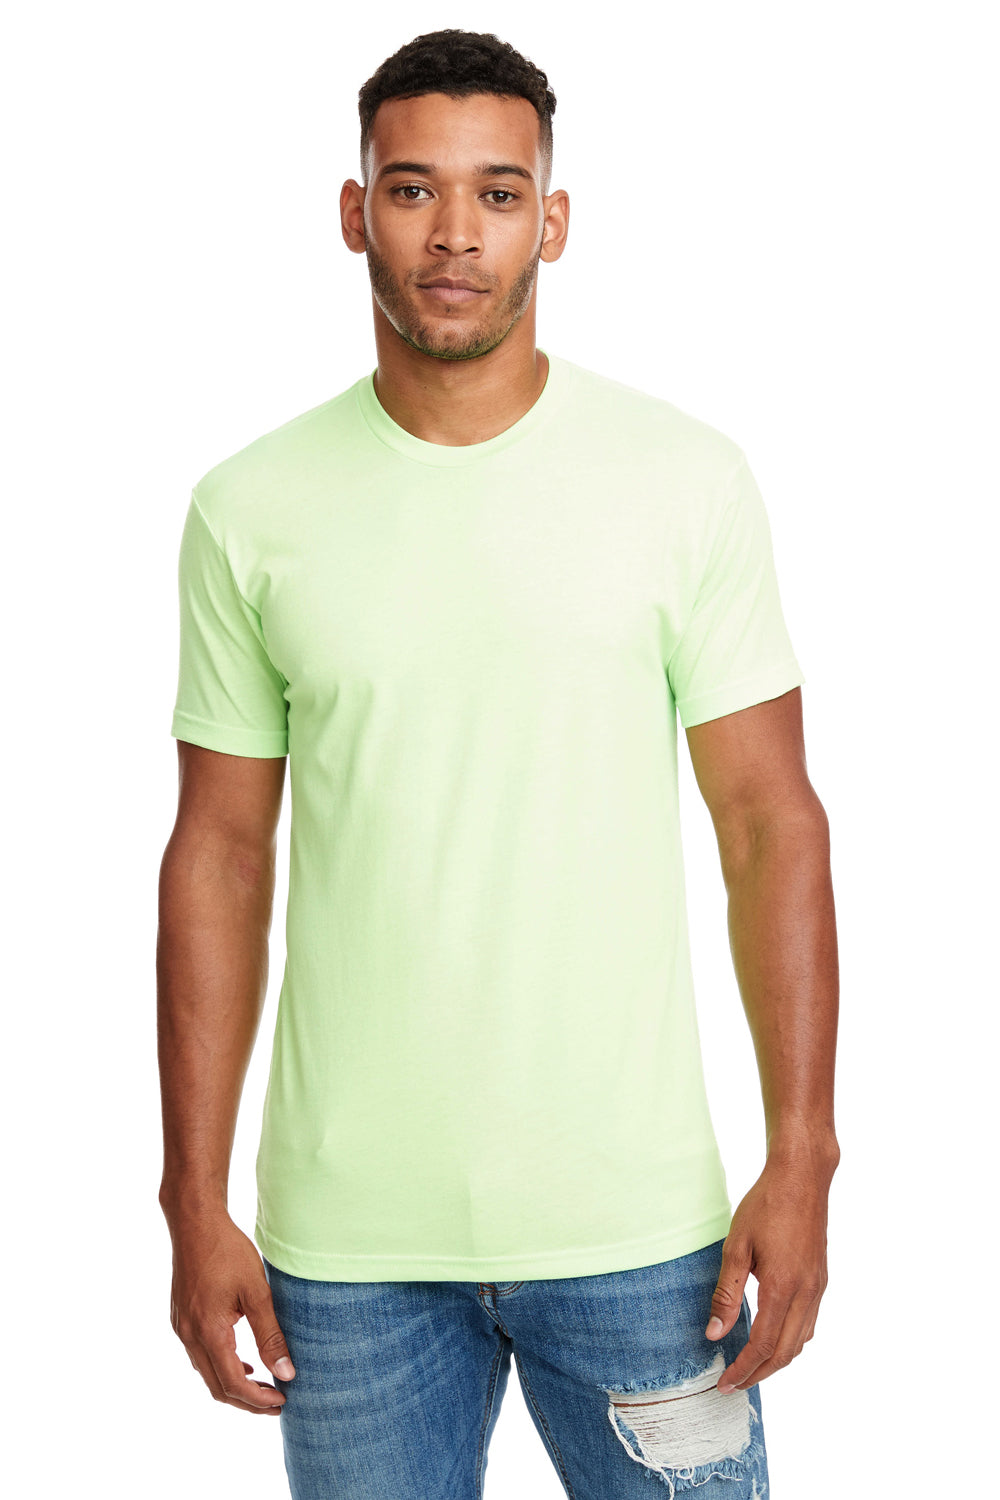 Next Level N6210 Mens CVC Jersey Short Sleeve Crewneck T-Shirt Apple Green Front